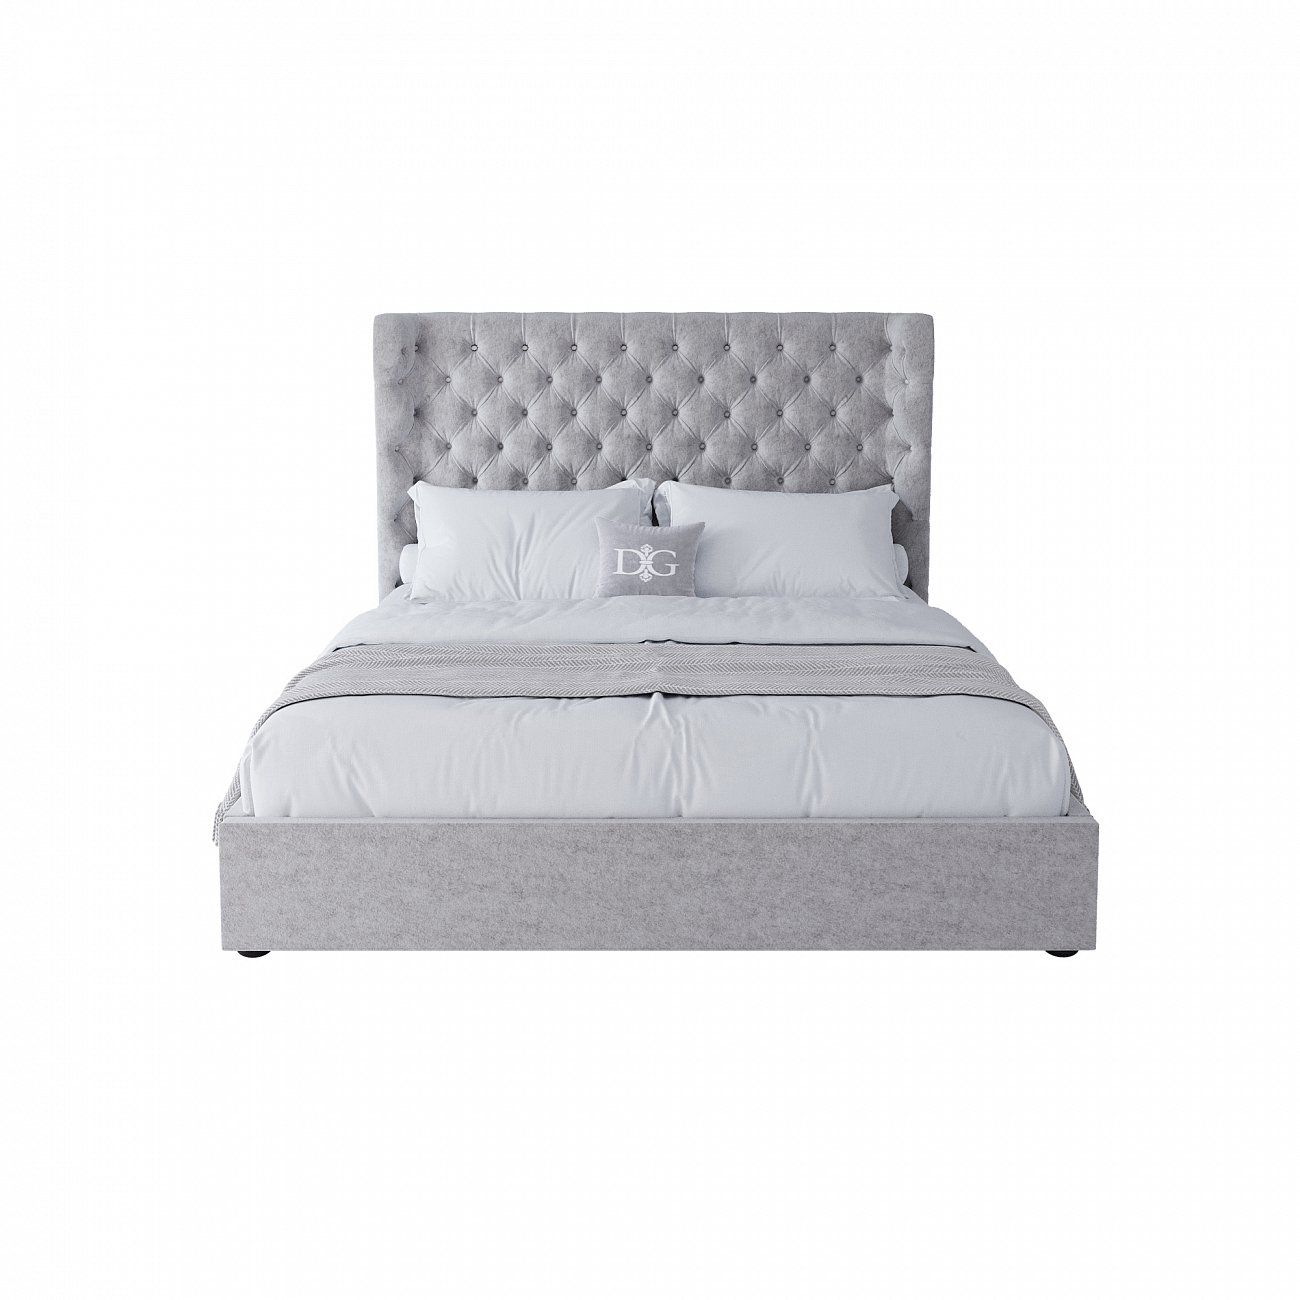 Double bed 180x200 cm cream Henbord, straight base